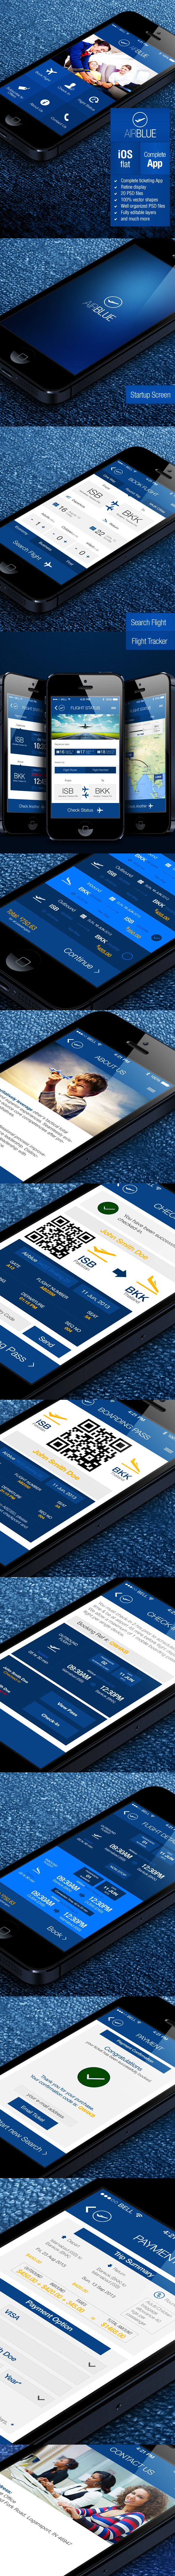 AirBlue - Flight Ticket Booking App